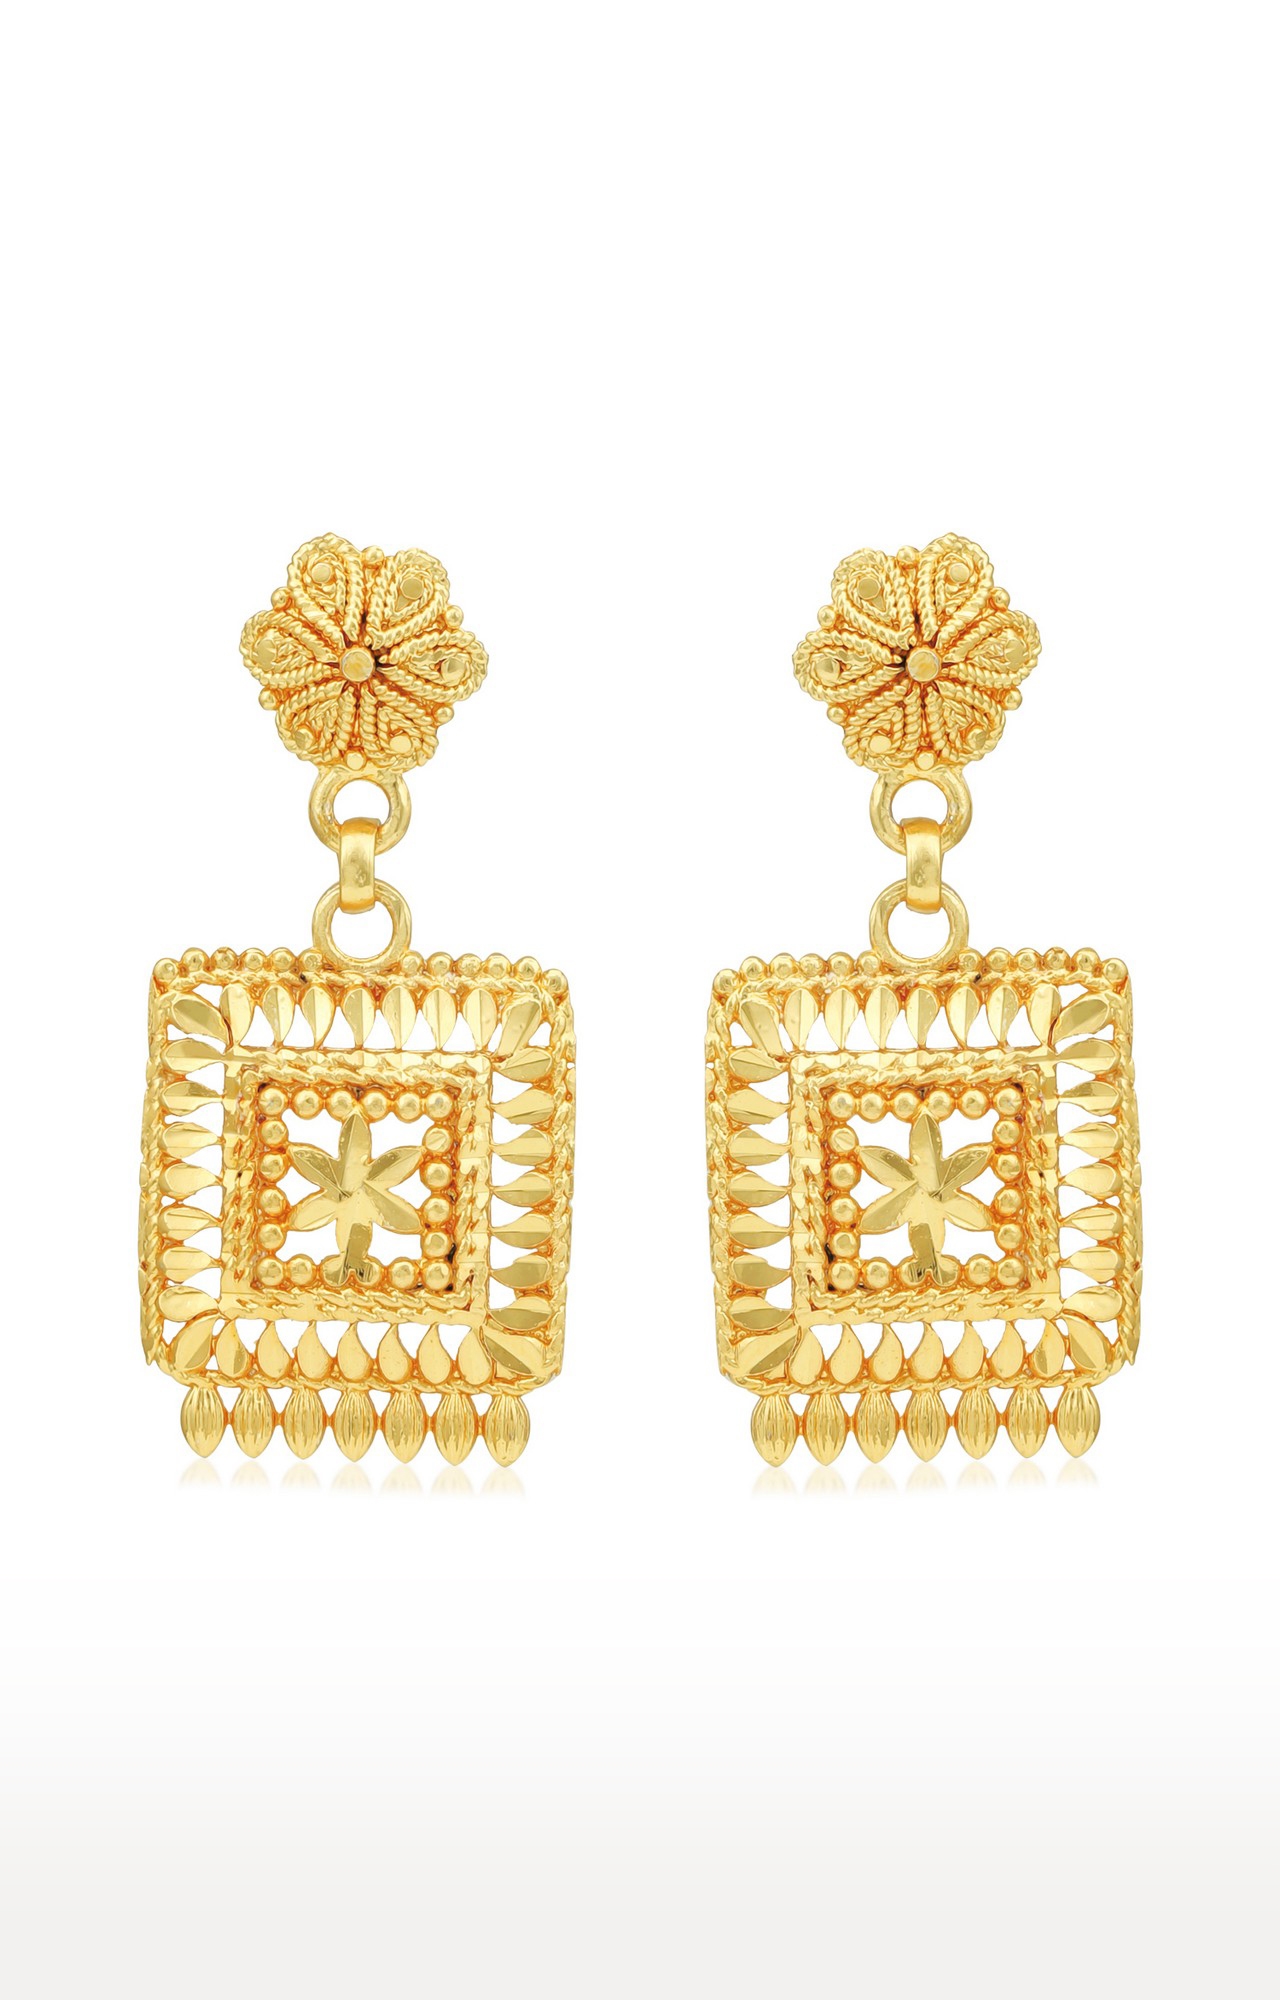 Sukkhi Glittery 24 Carat Gold Plated Choker Necklace Set For Women